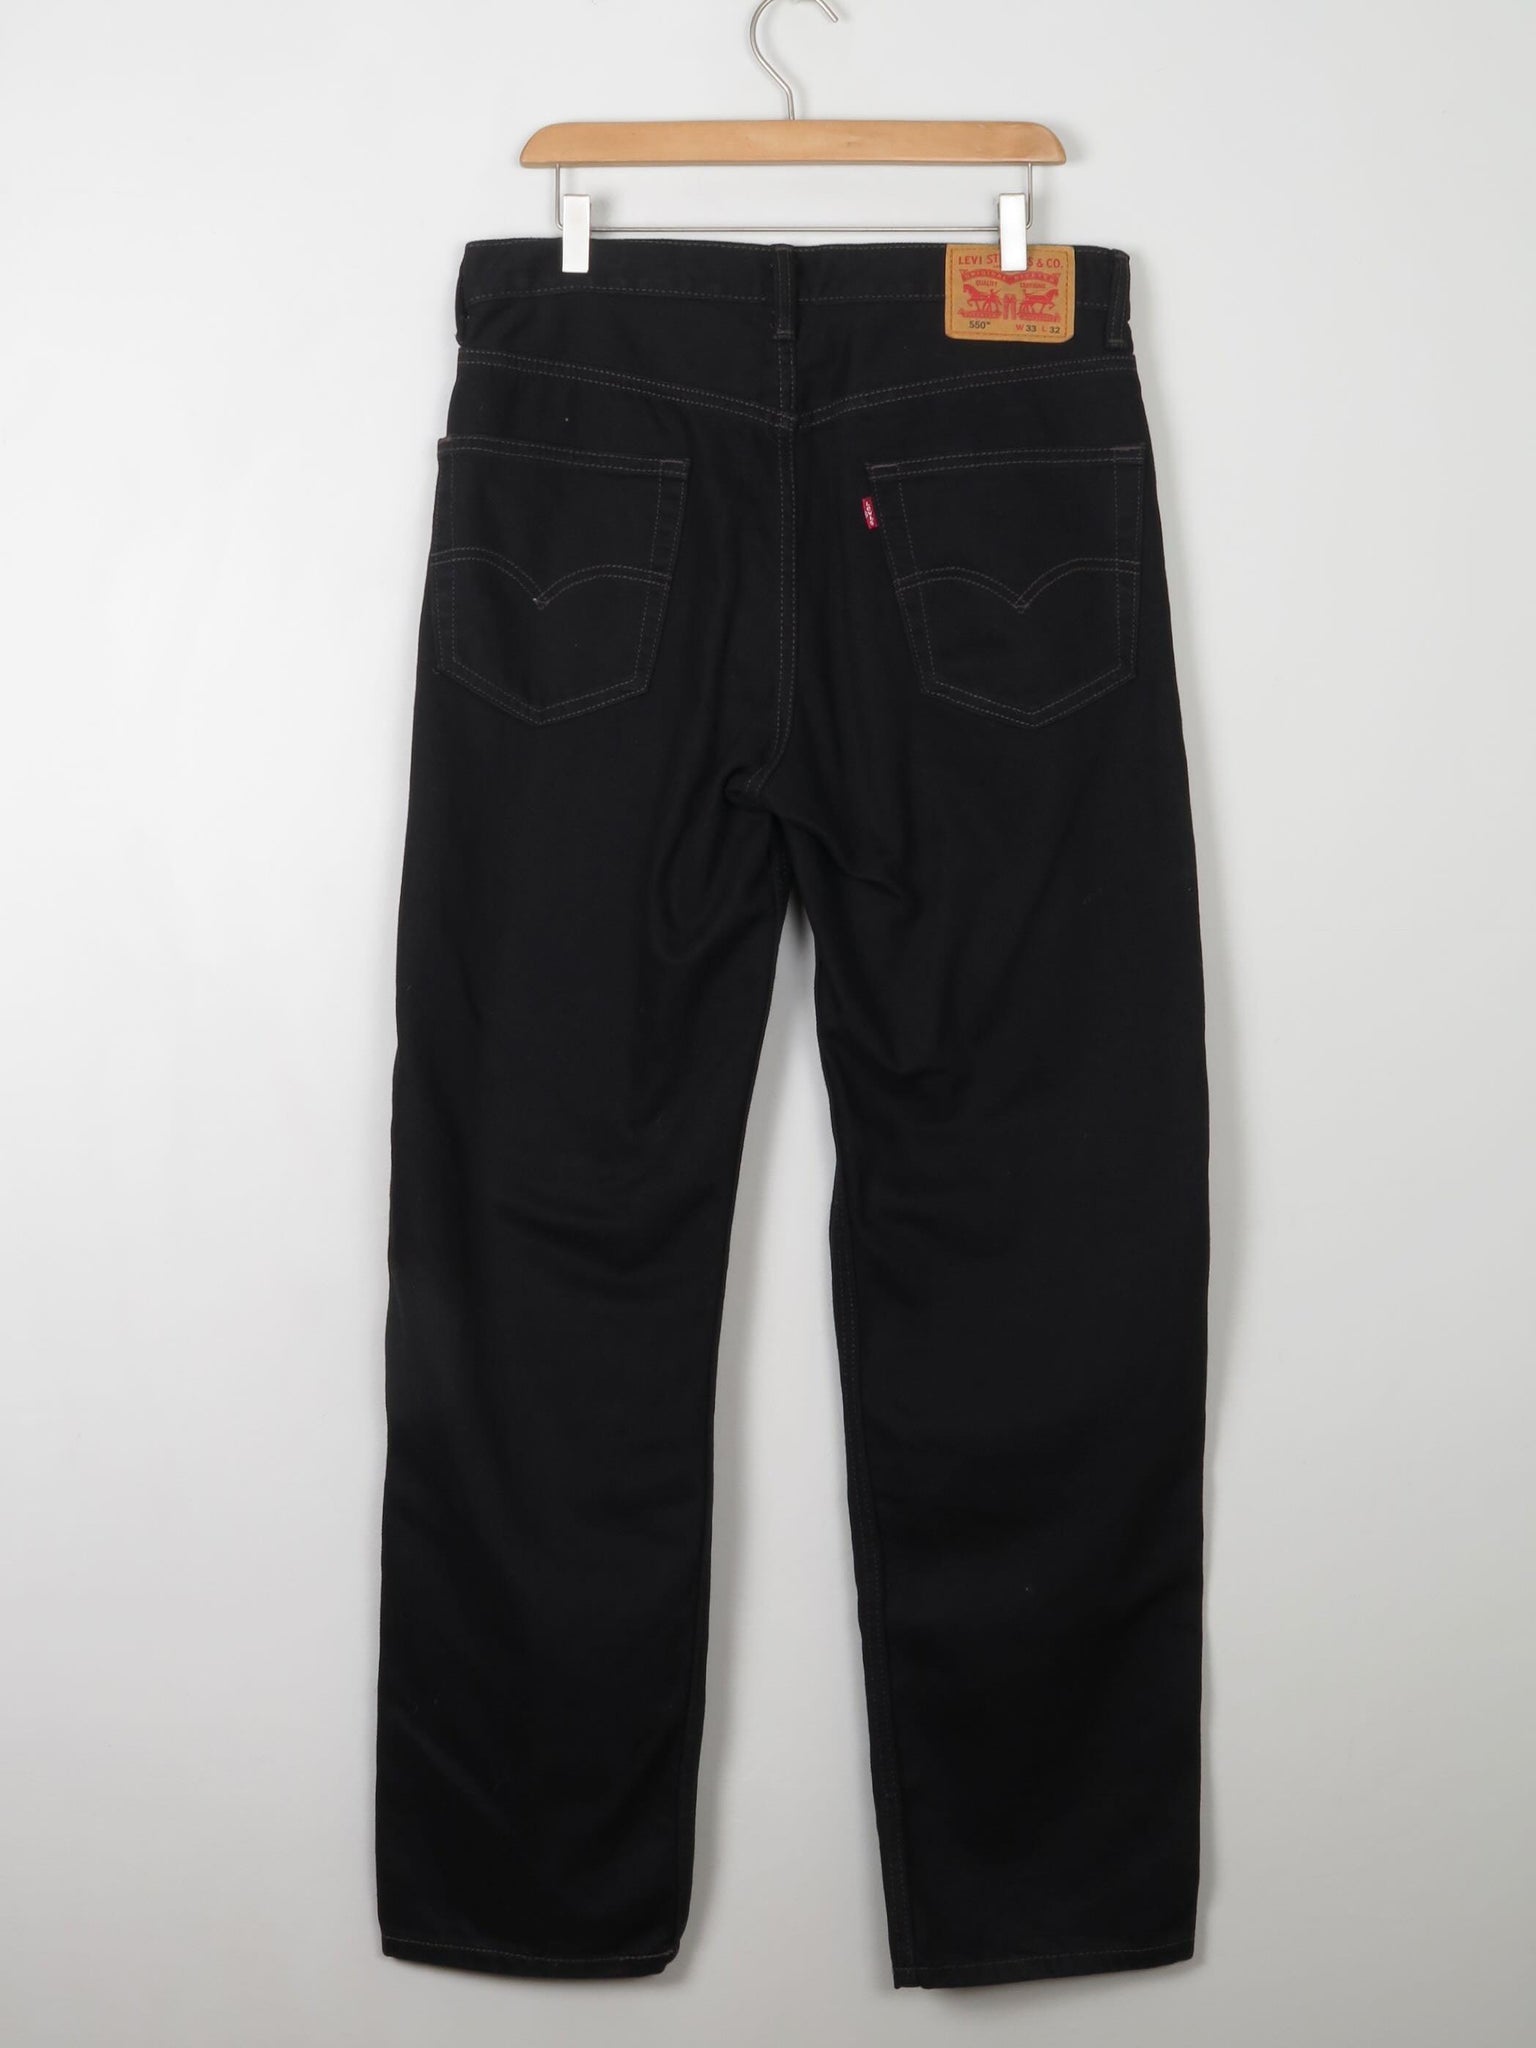 Men's Black Levi's 550 Jeans 33W/32L - The Harlequin